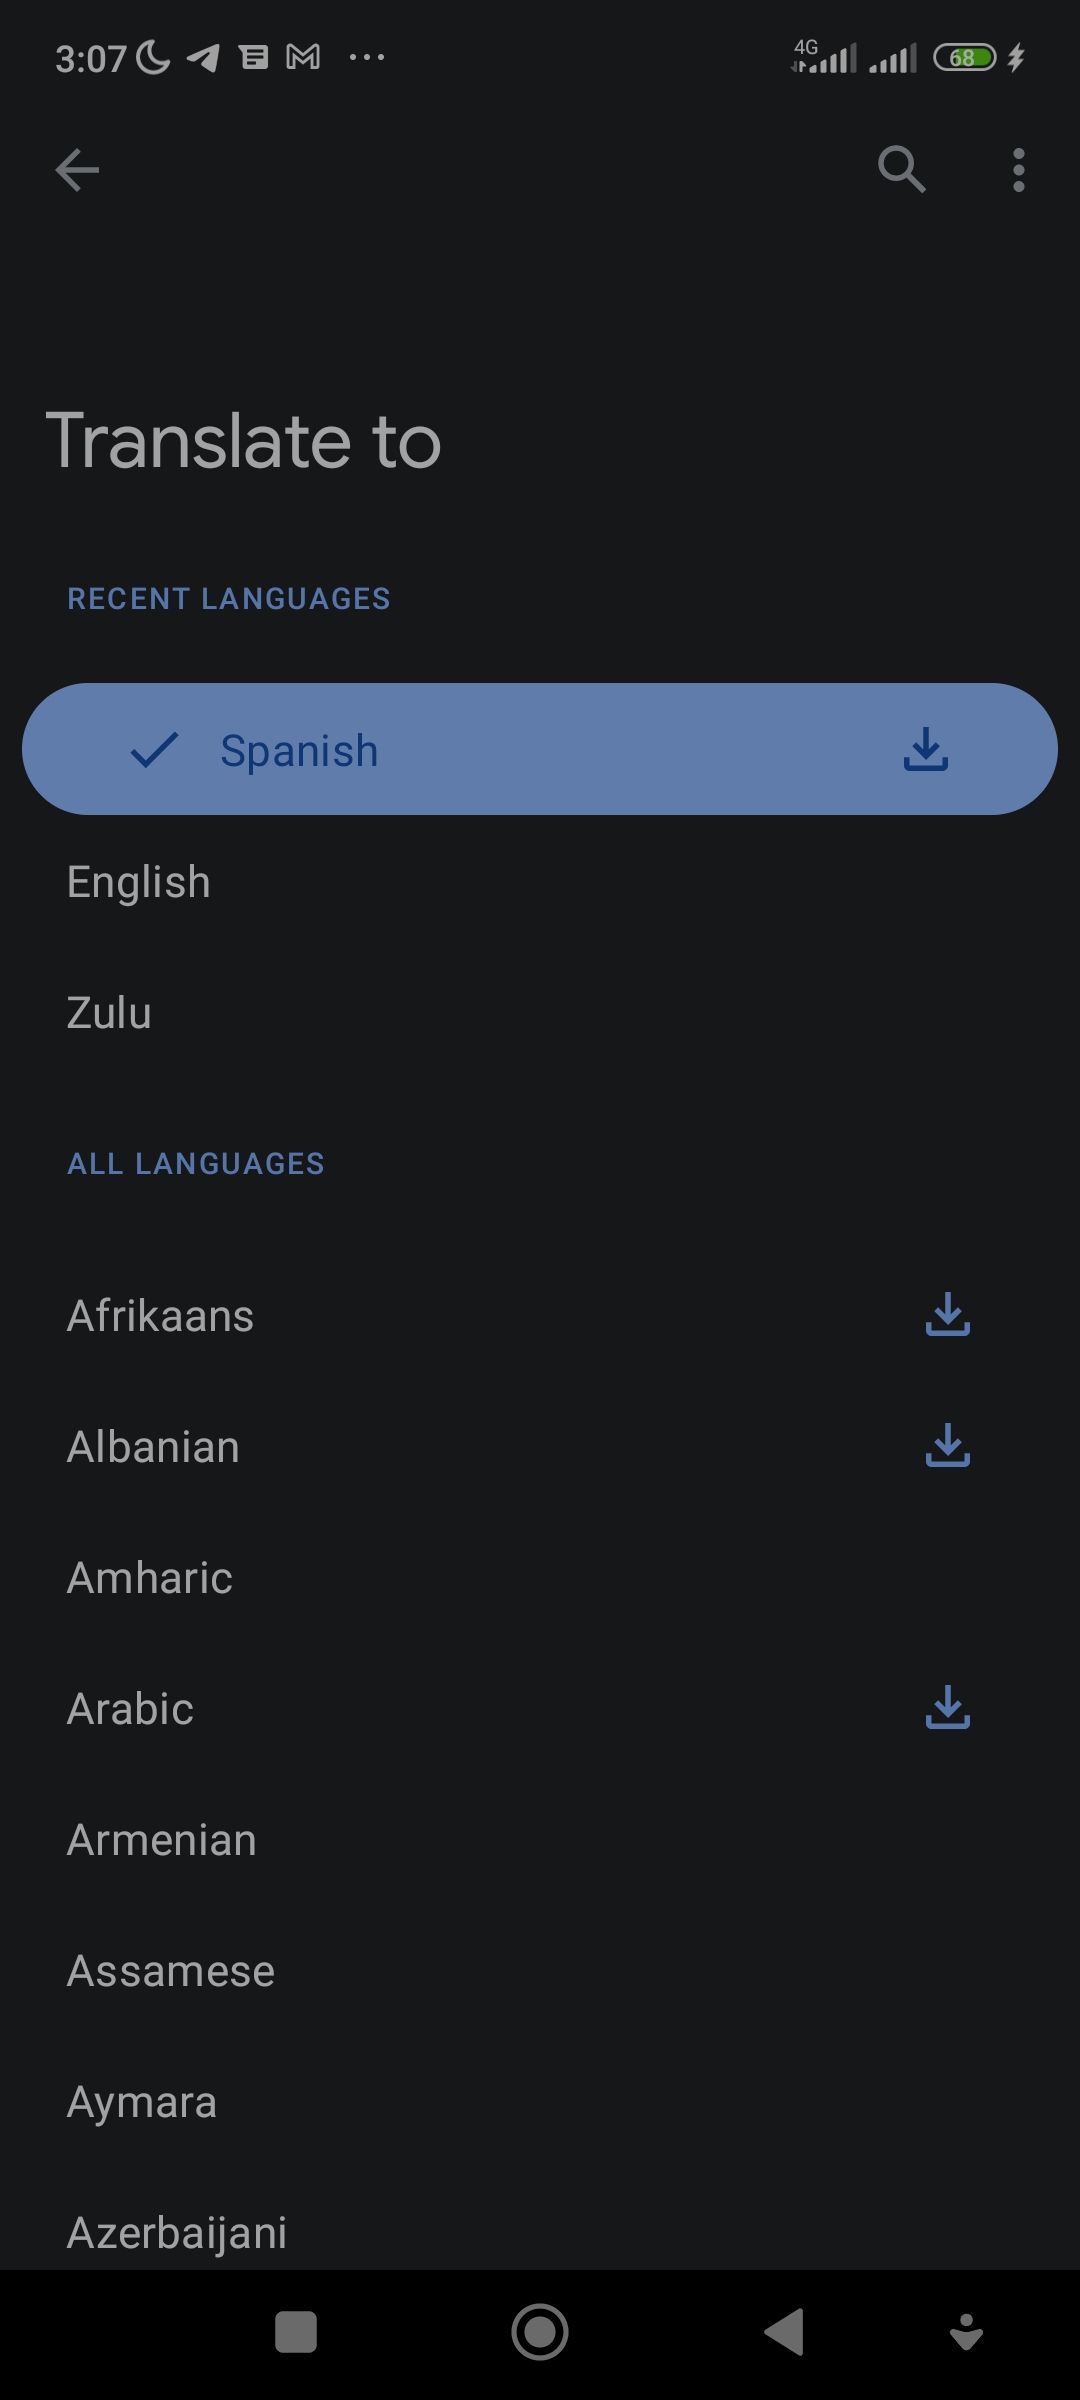 Select a language to Translate to on the Google Translate app